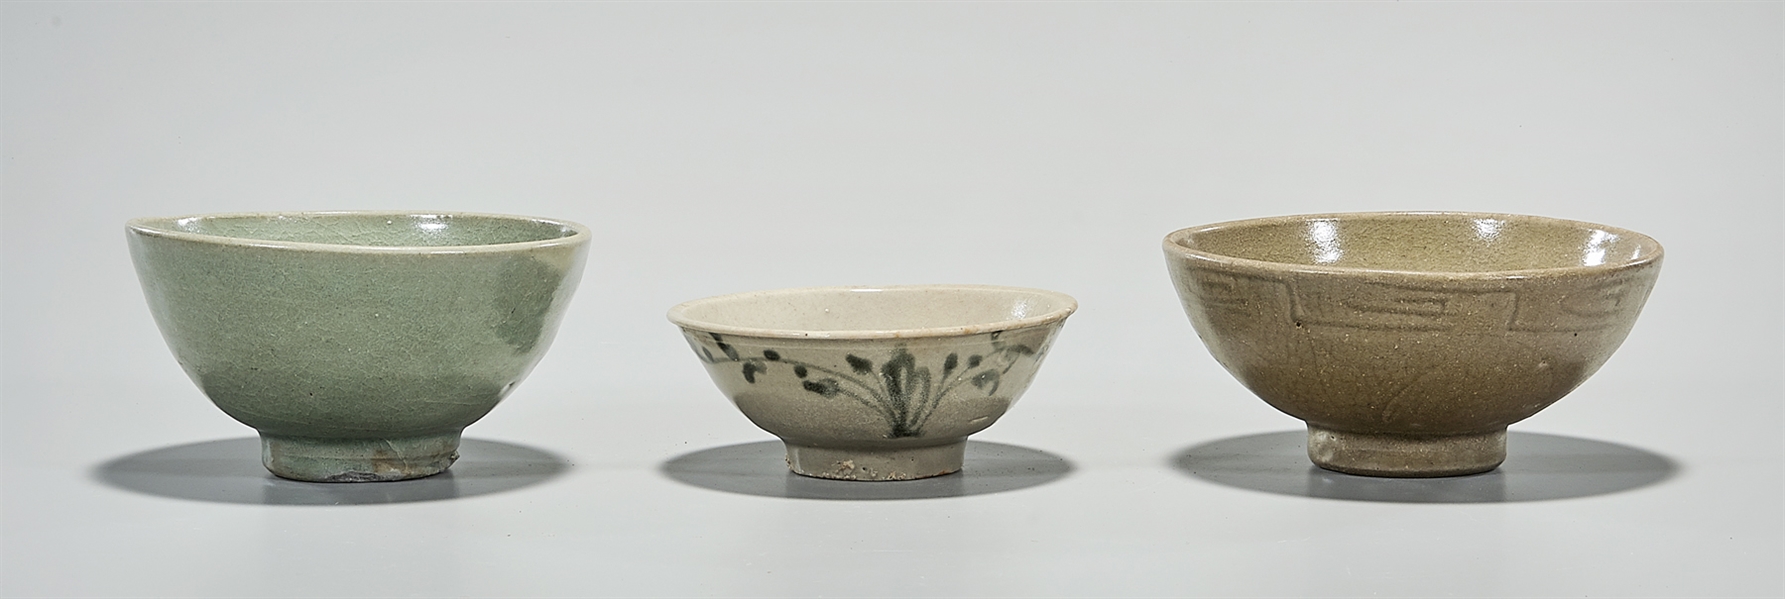 Three southeast Asian ceramic bowls  2af2b9